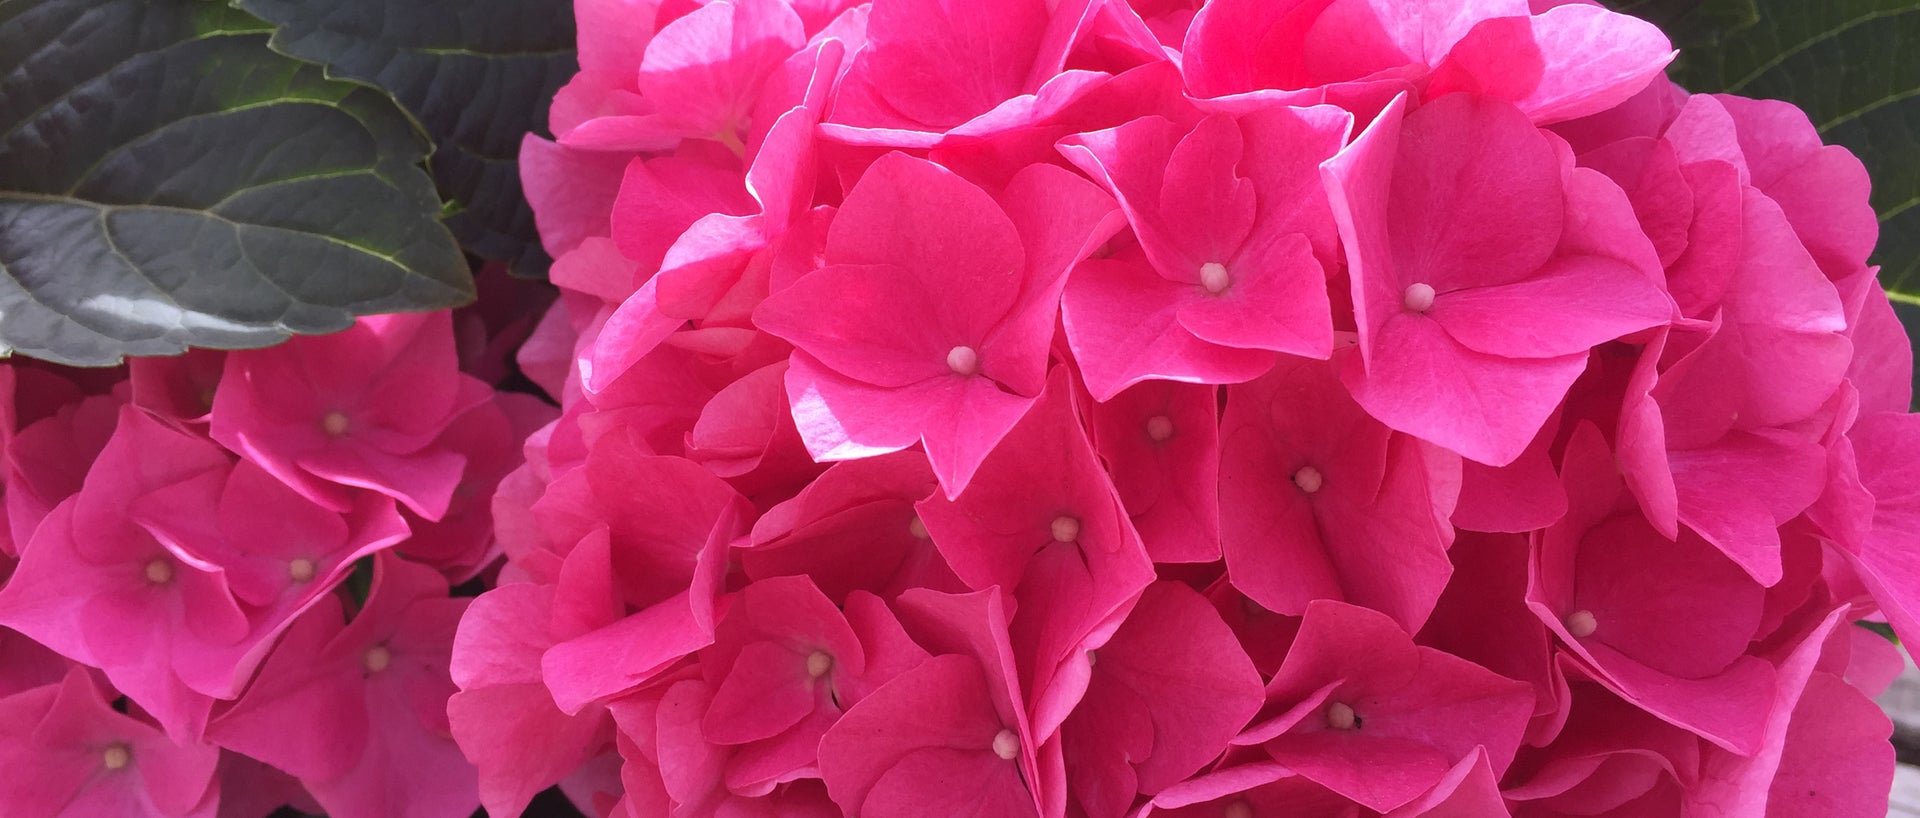 Up close pink hydrangea